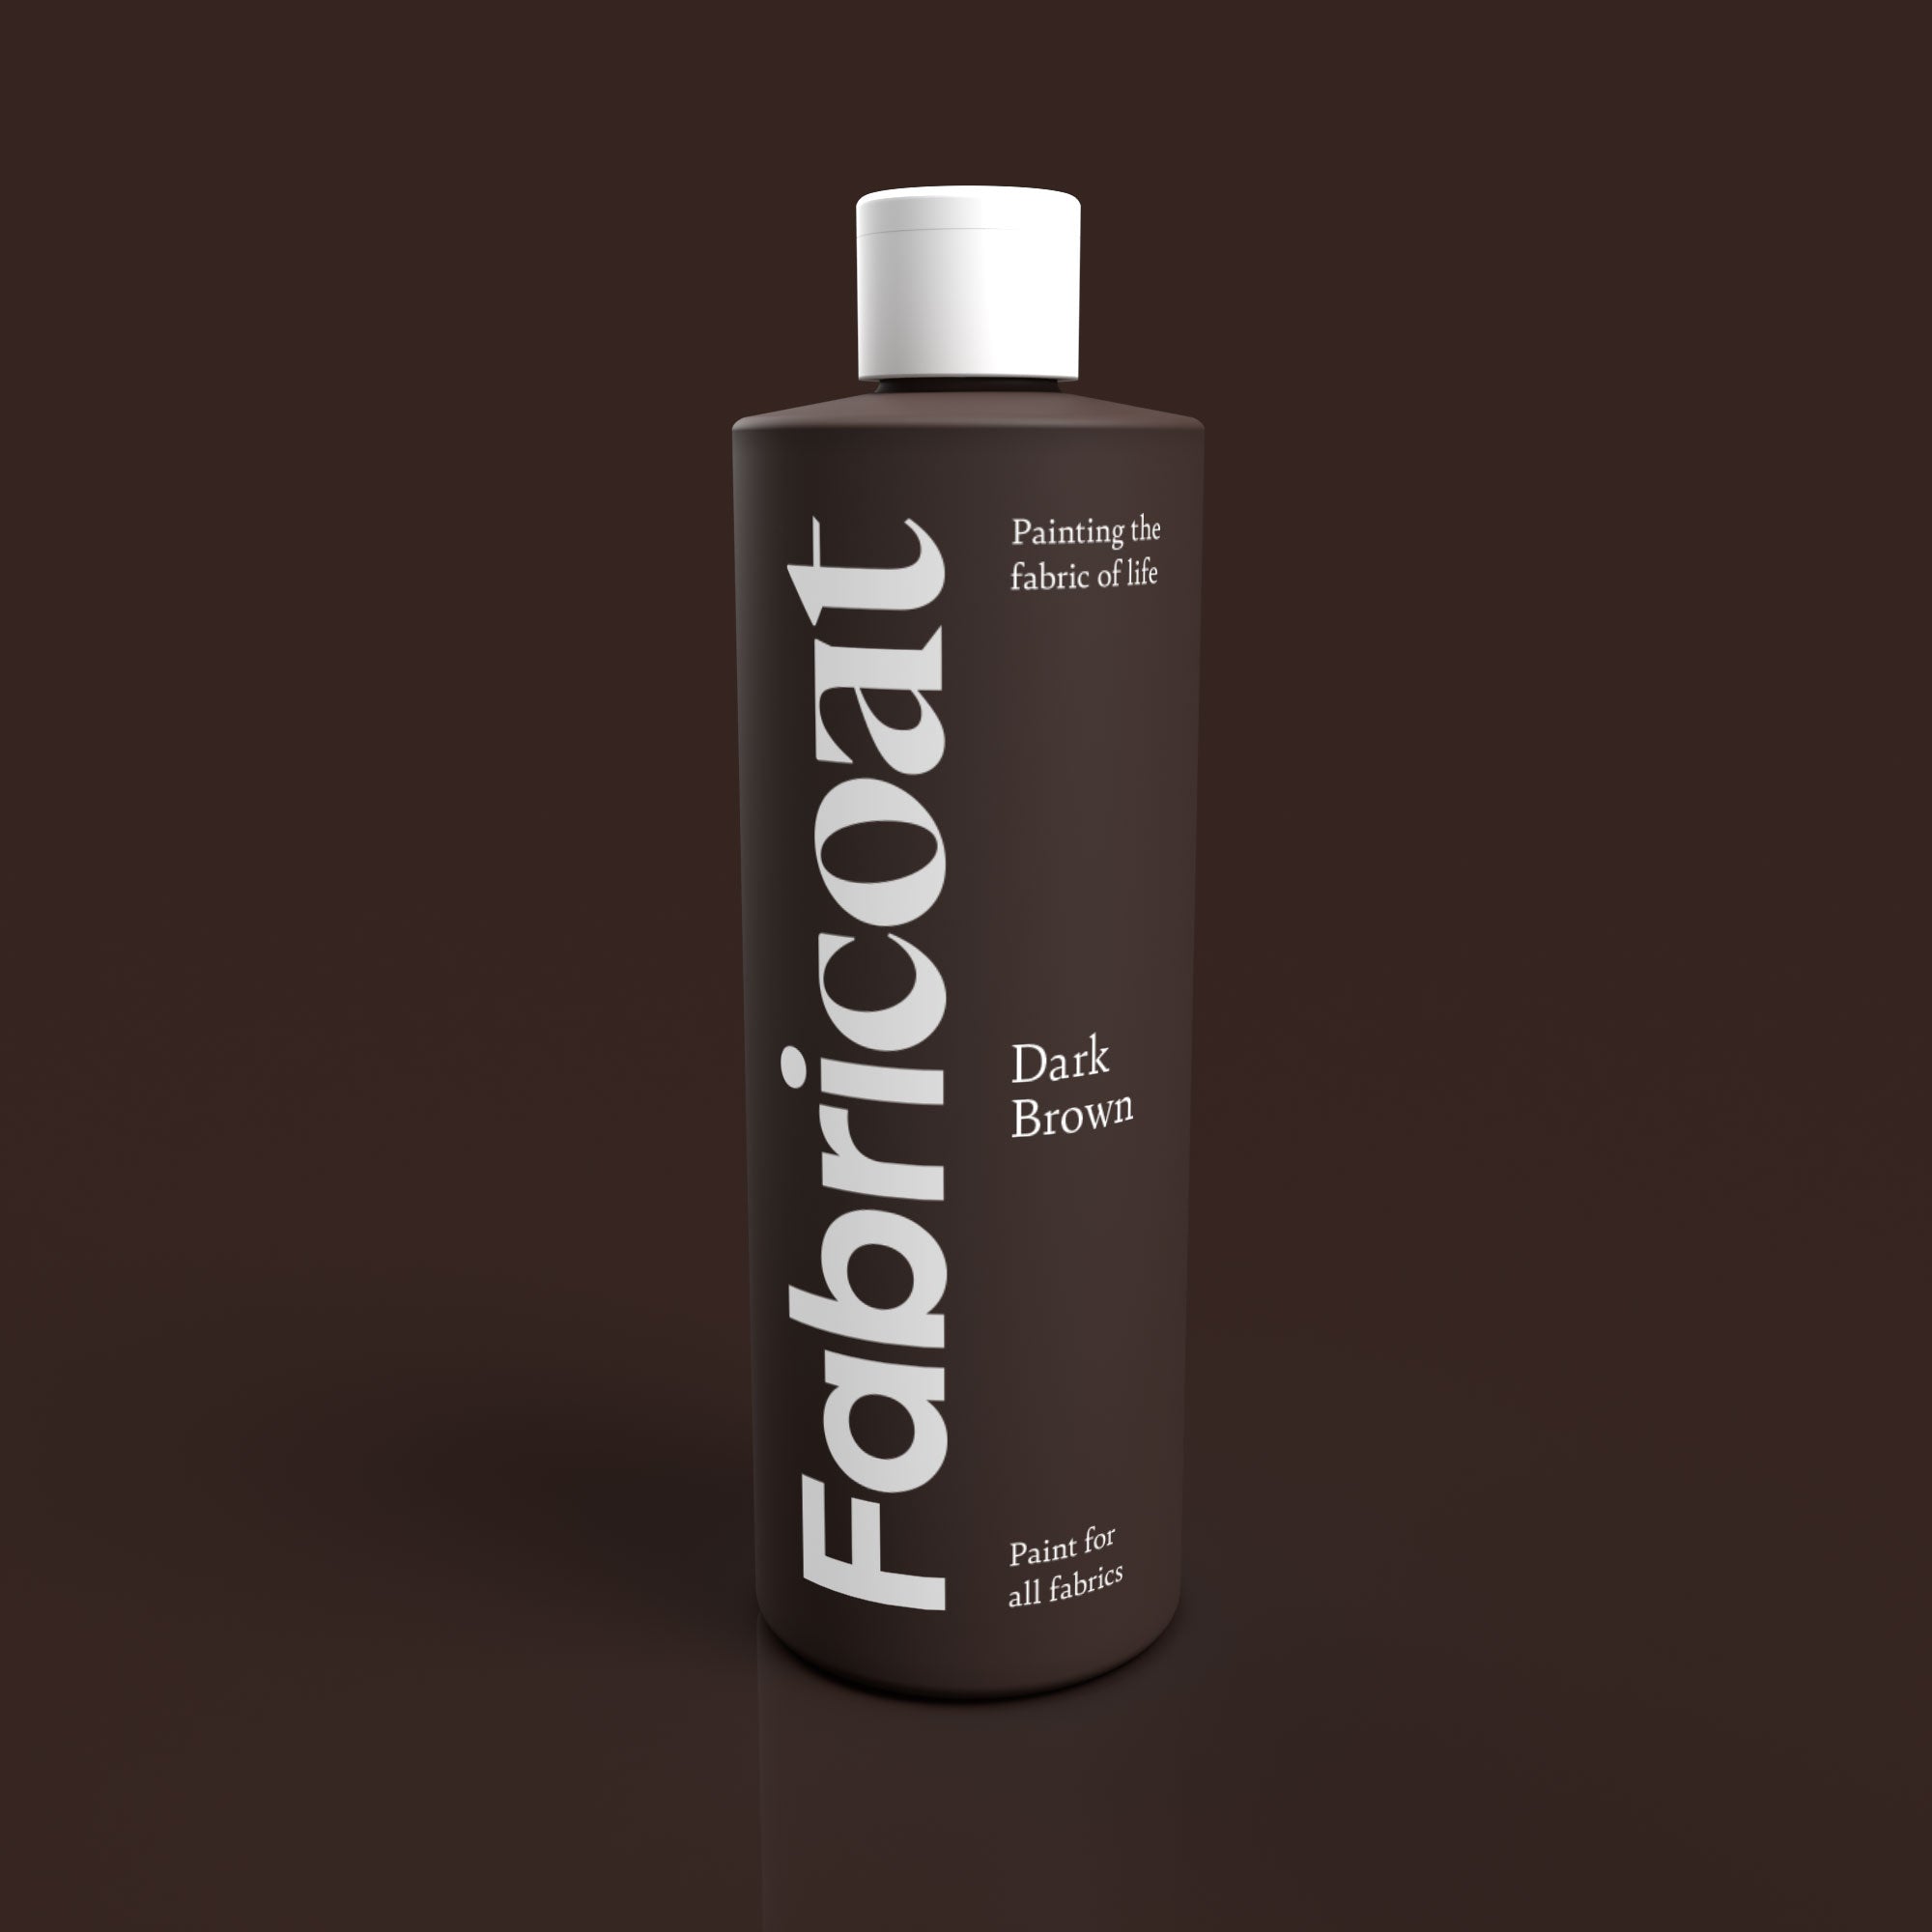 Fabricoat Dark Brown Fabric Paint 500ml Bottle